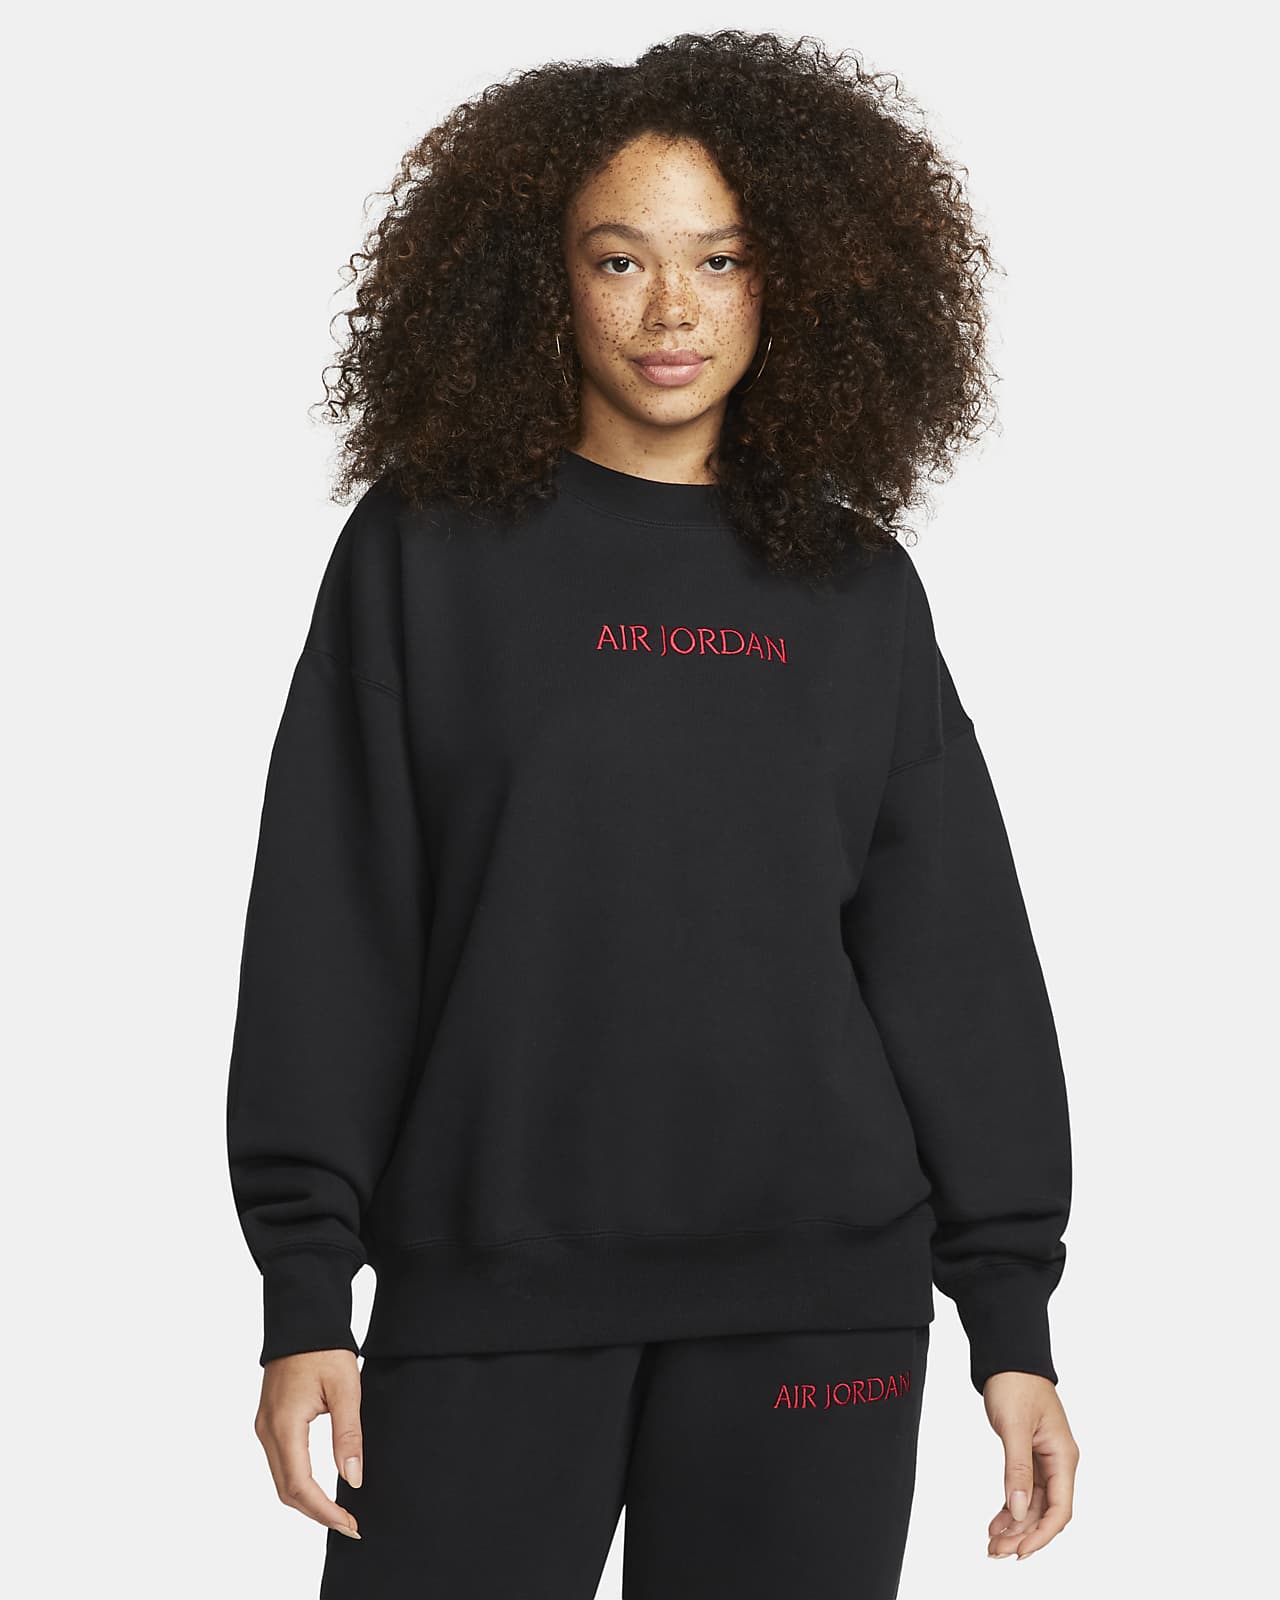 Air Jordan Women's Crew Sweatshirt. Nike.com